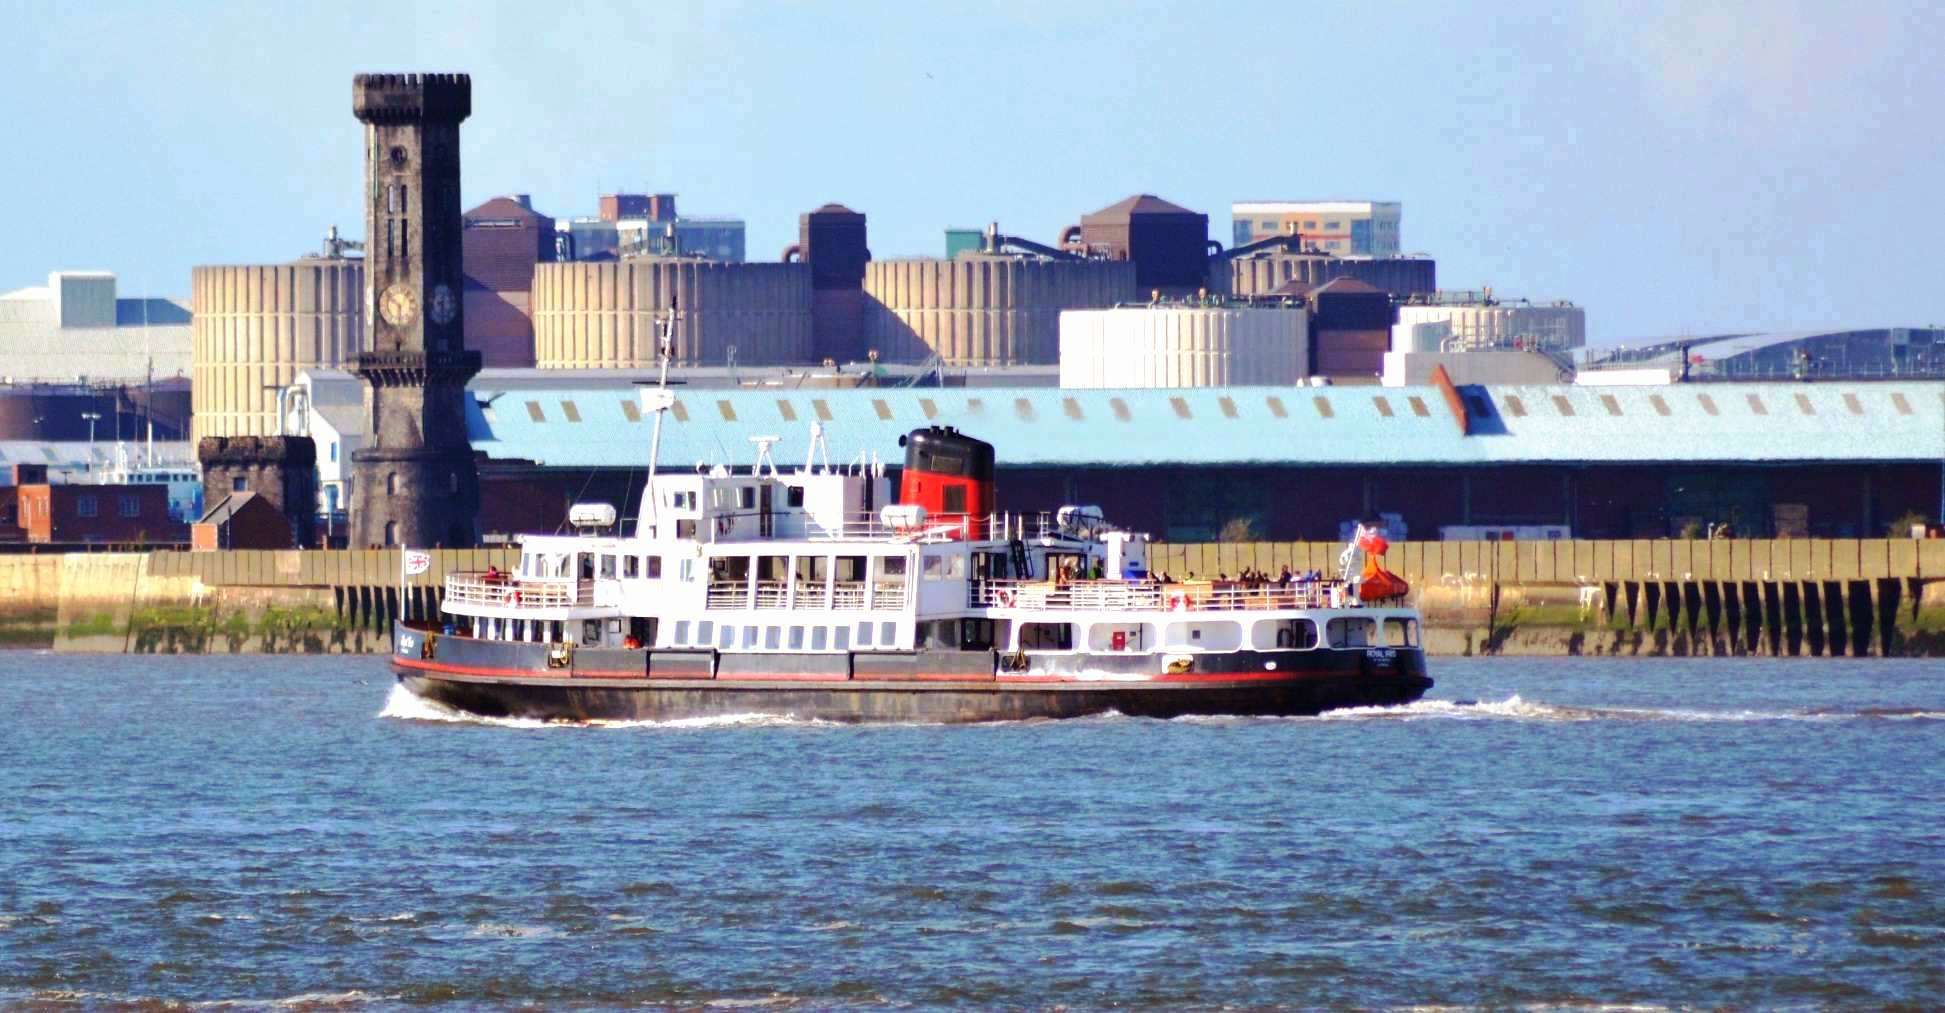 Mersey ferry Royal Iris